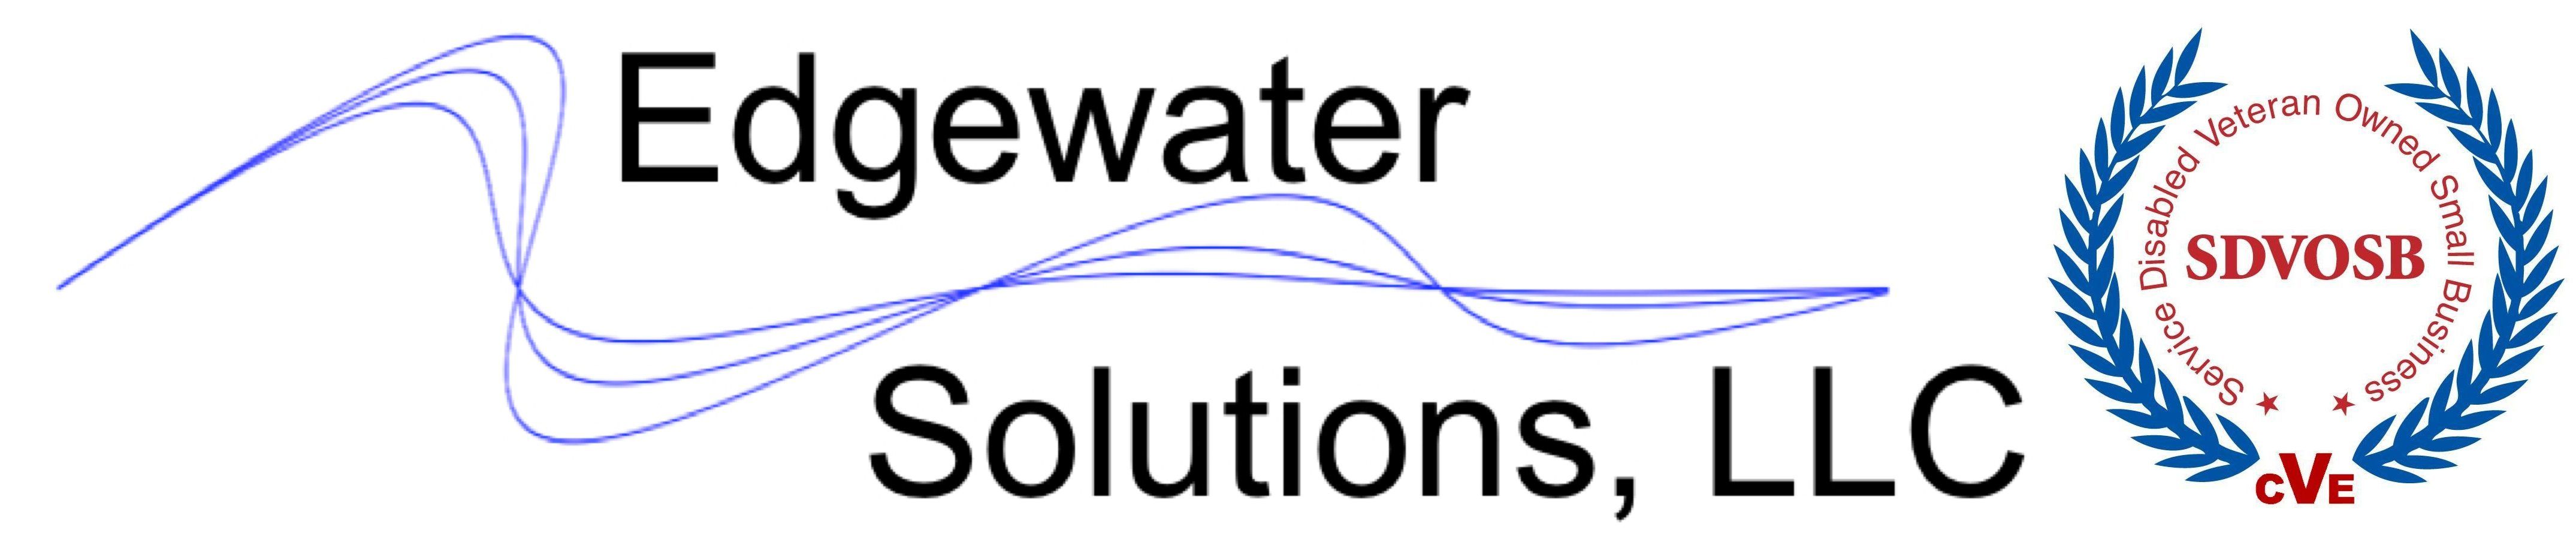 Edgewater Solutions, LLC